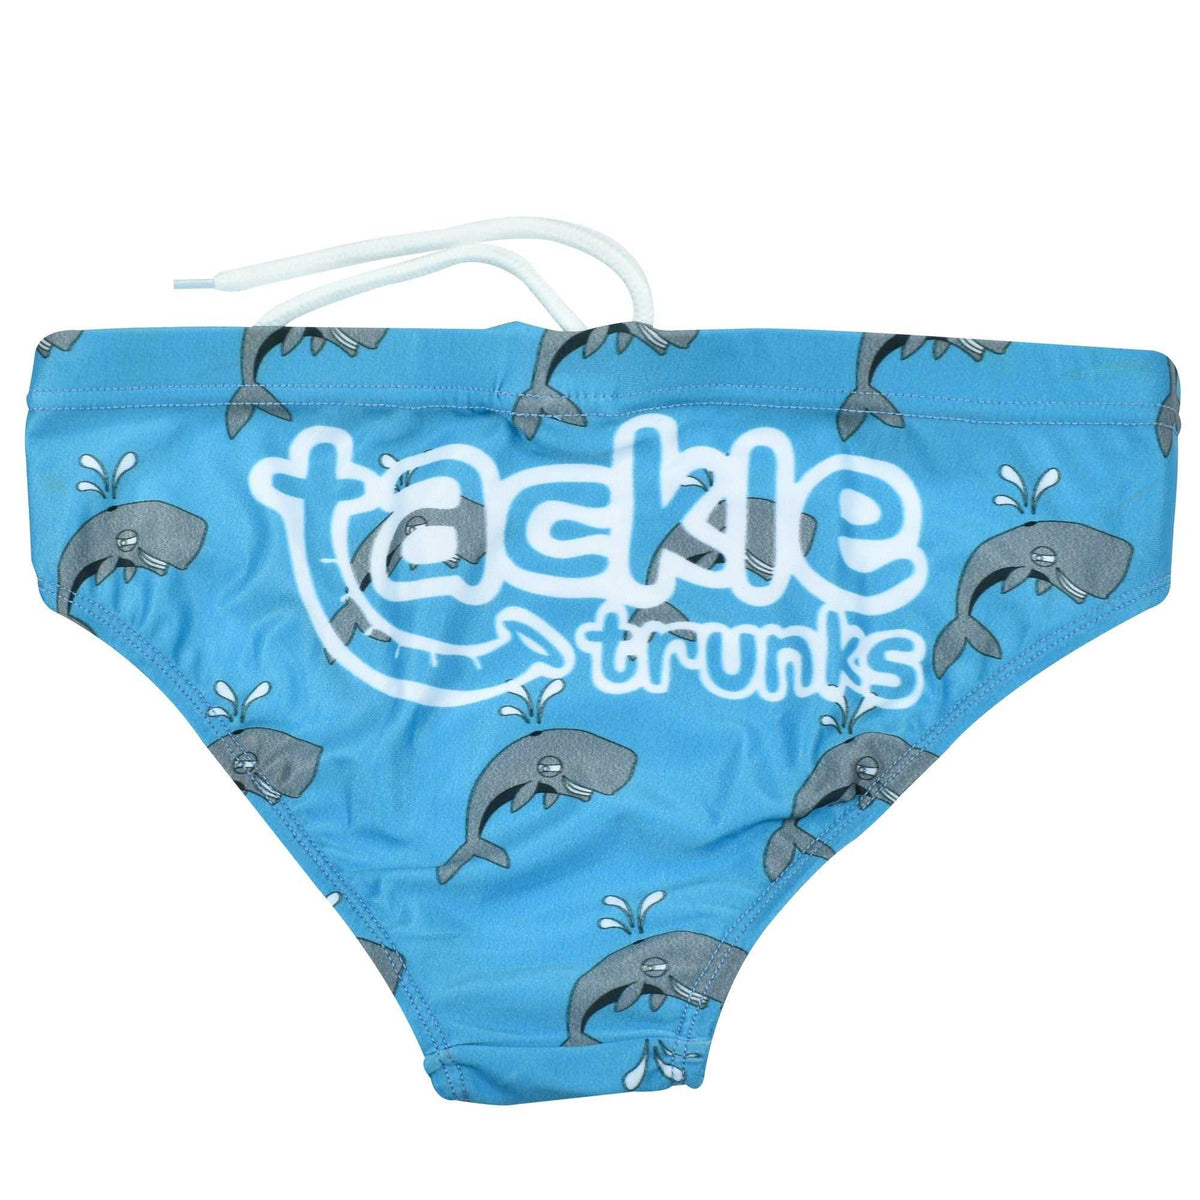 Sperm Whale Tackle Trunks - Optimum